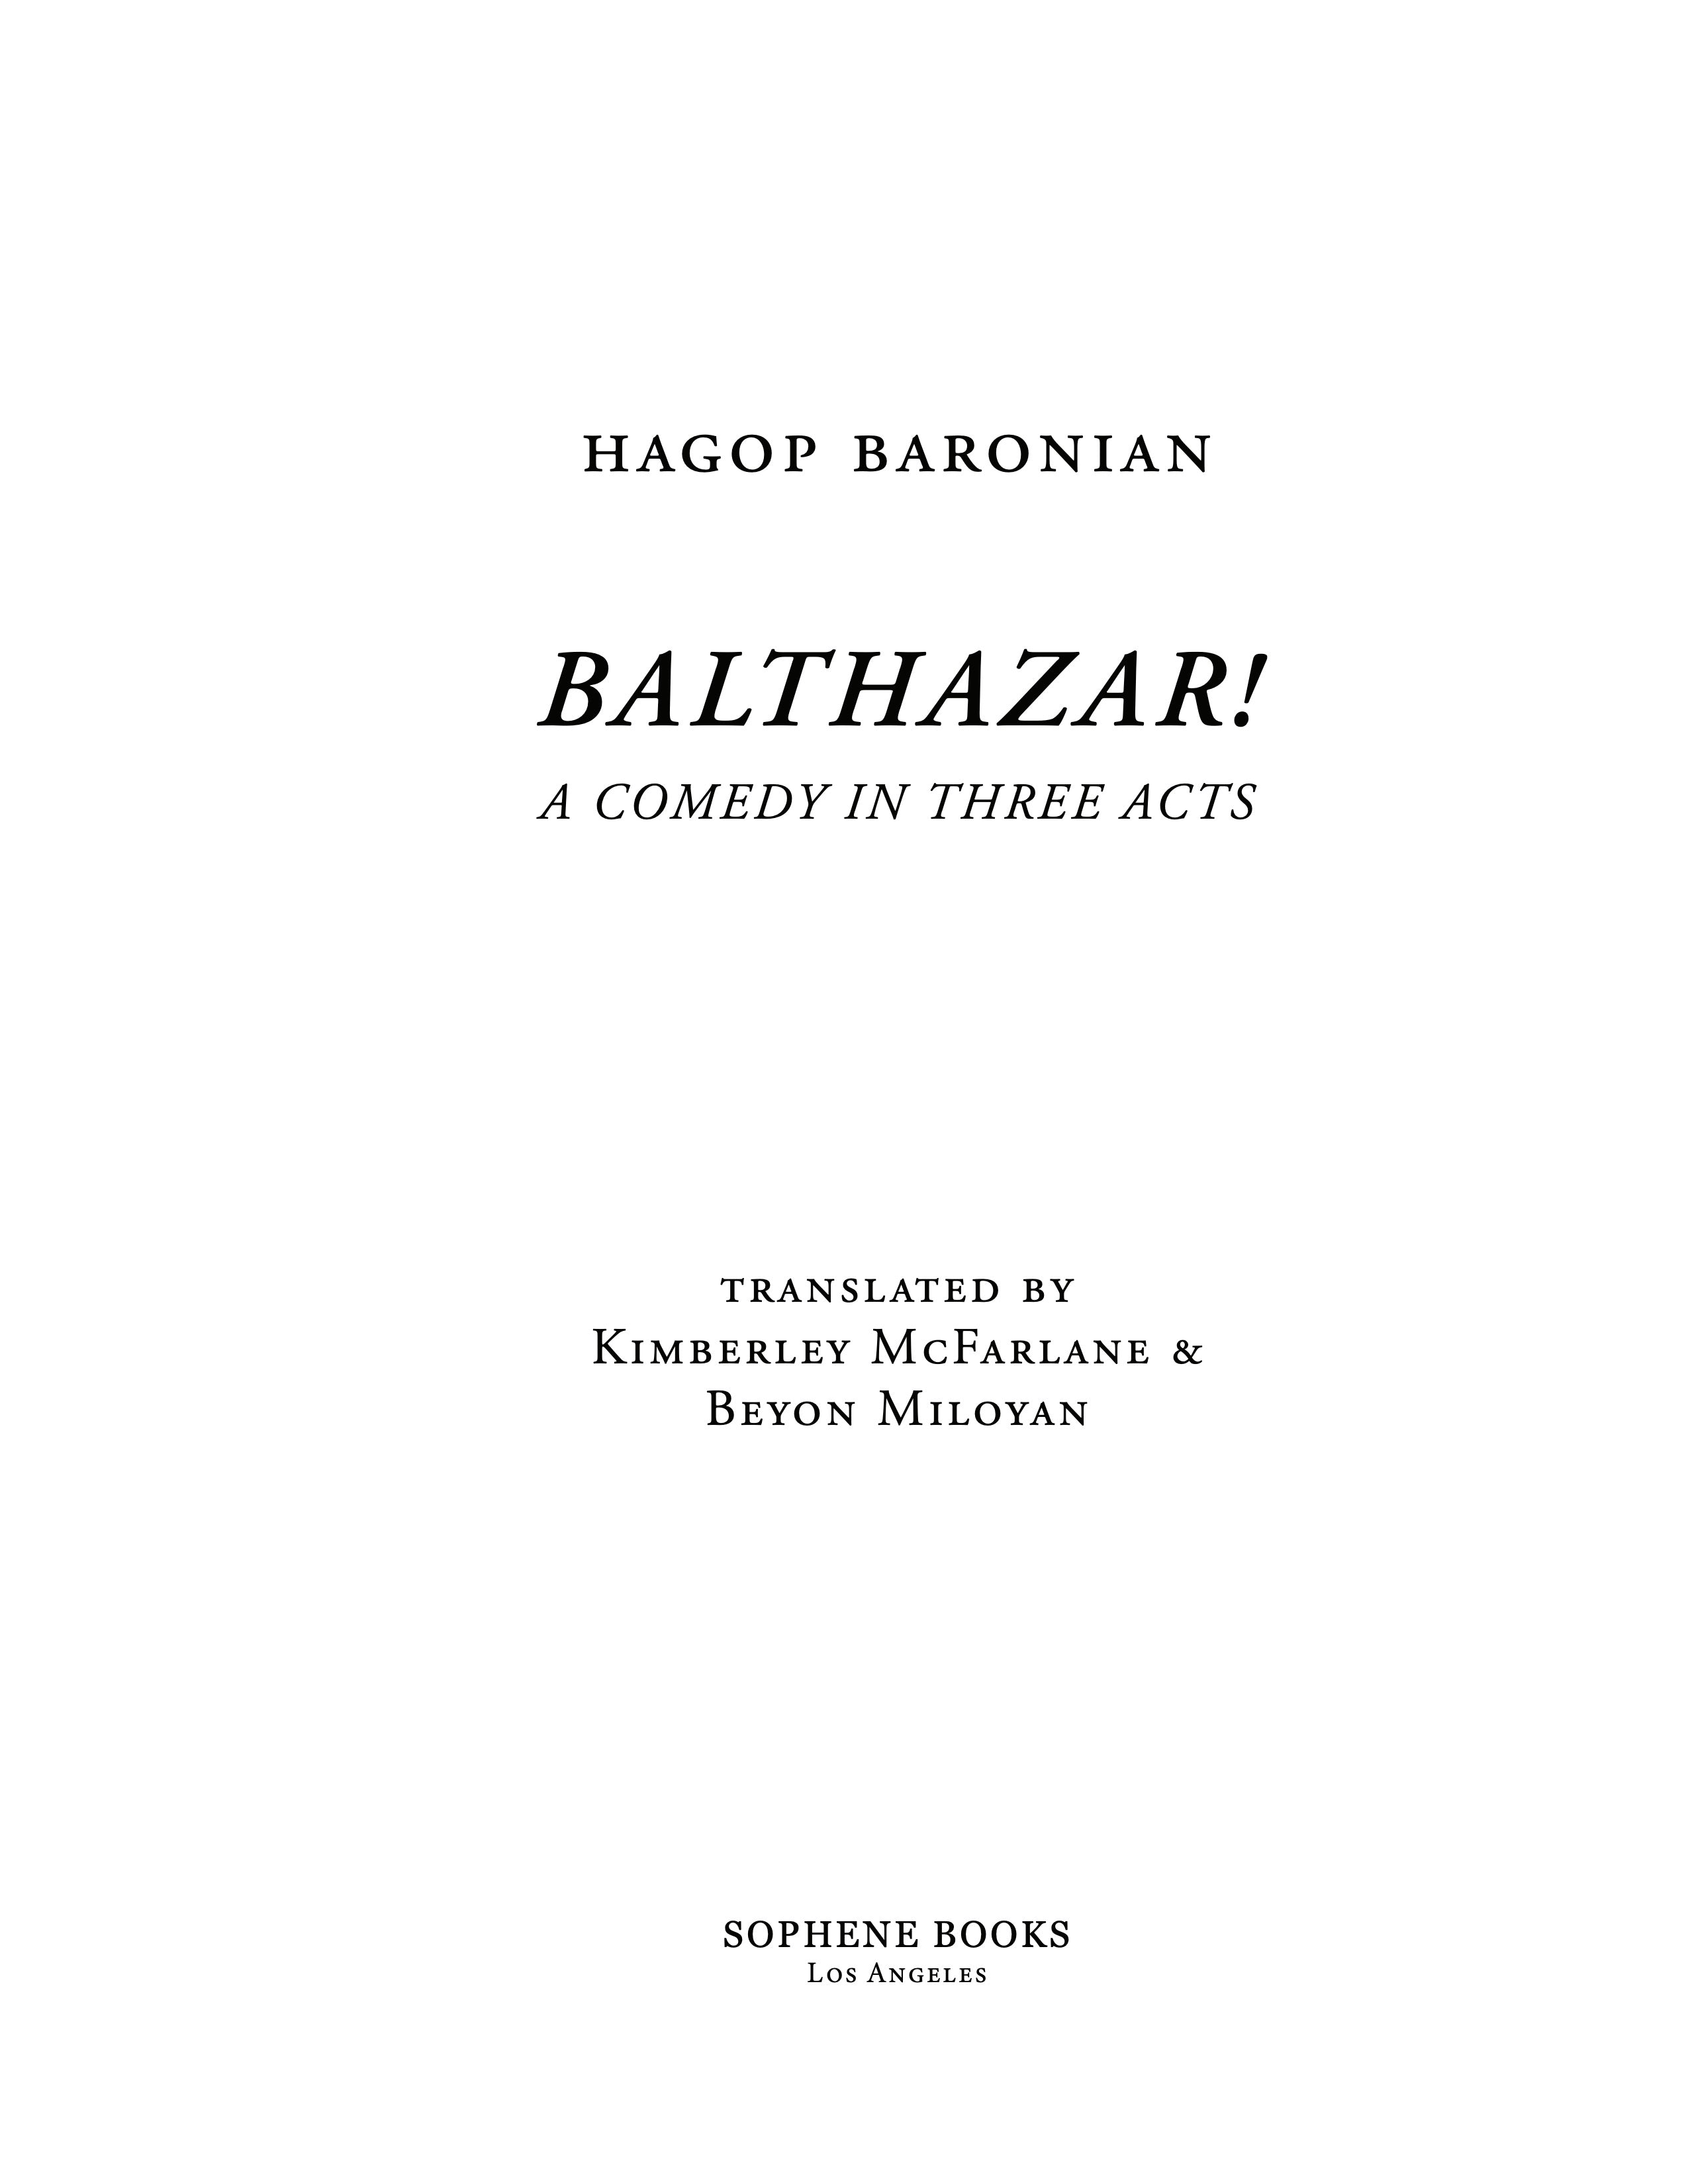 Balthazar! title page